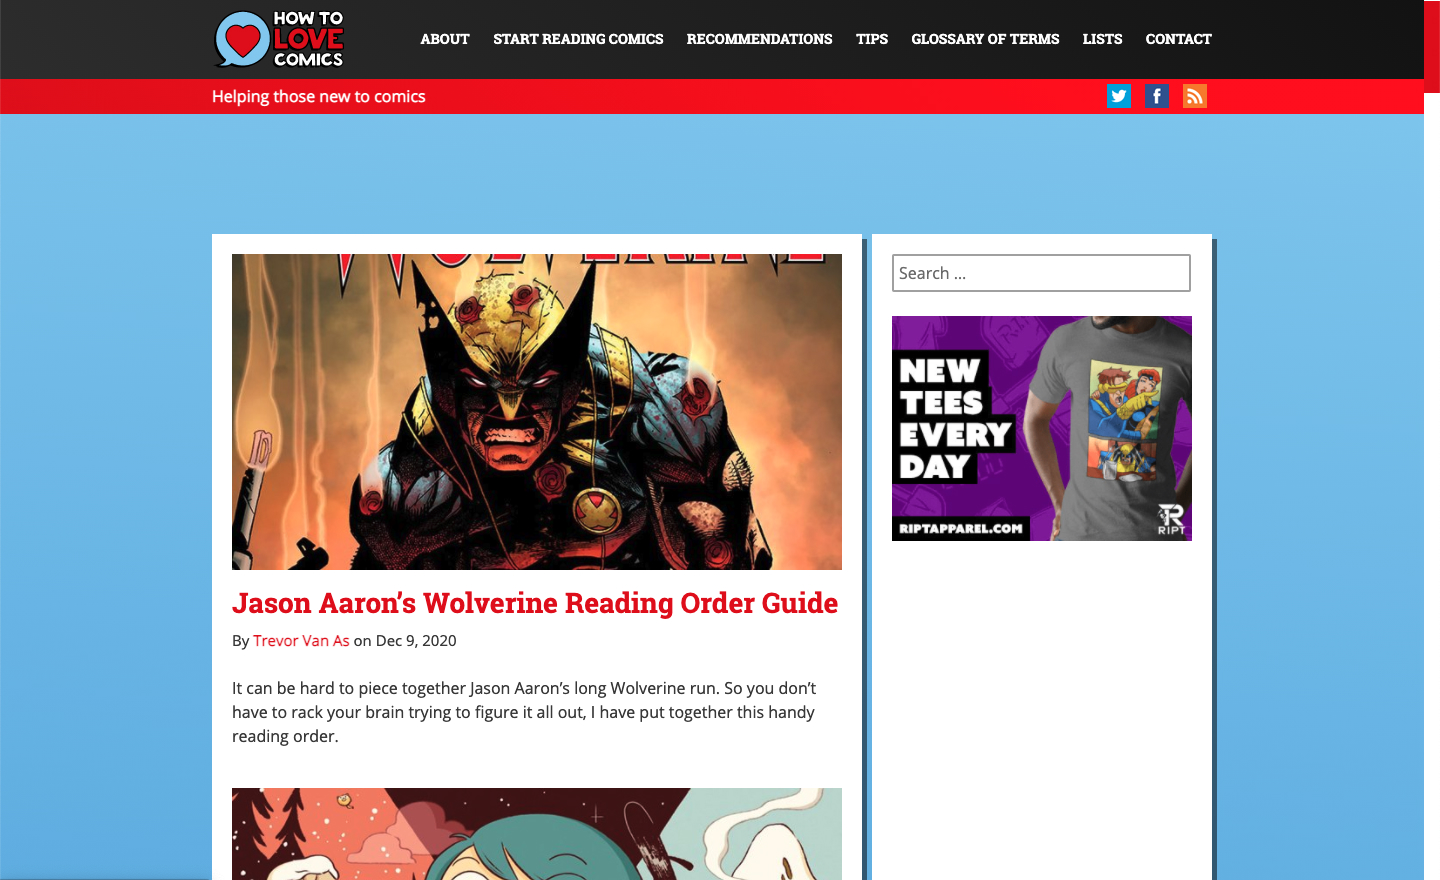 How to Love Comics homepage